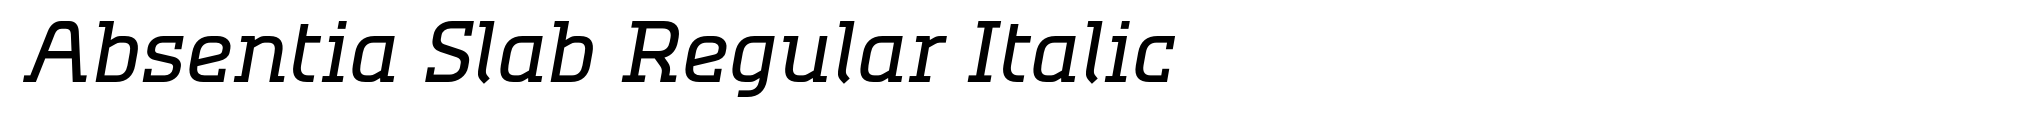 Absentia Slab Regular Italic image